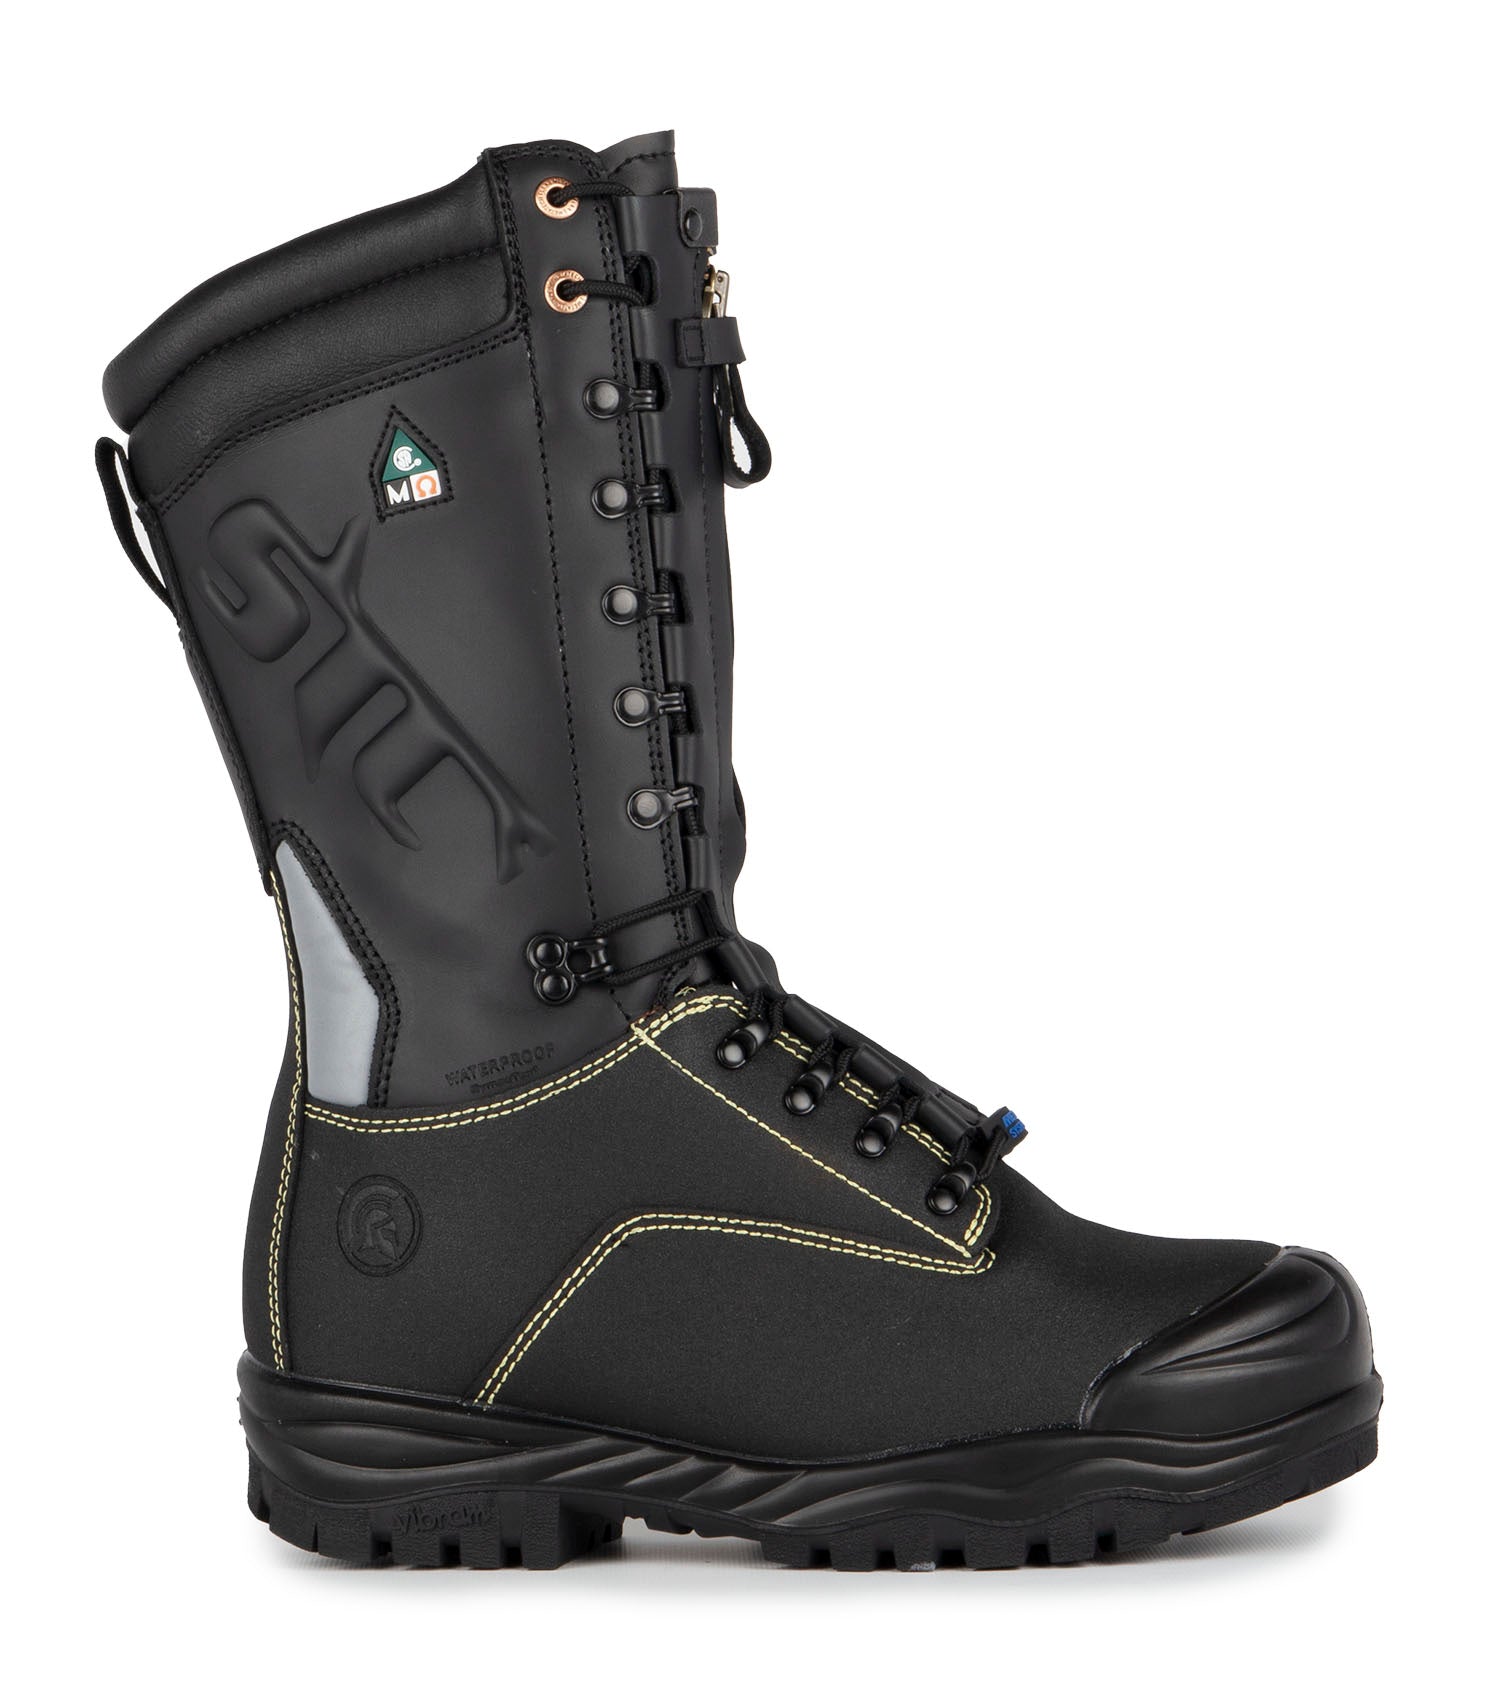 Granite, Black | 14' Mining Boots | Flexible Metguard Protection